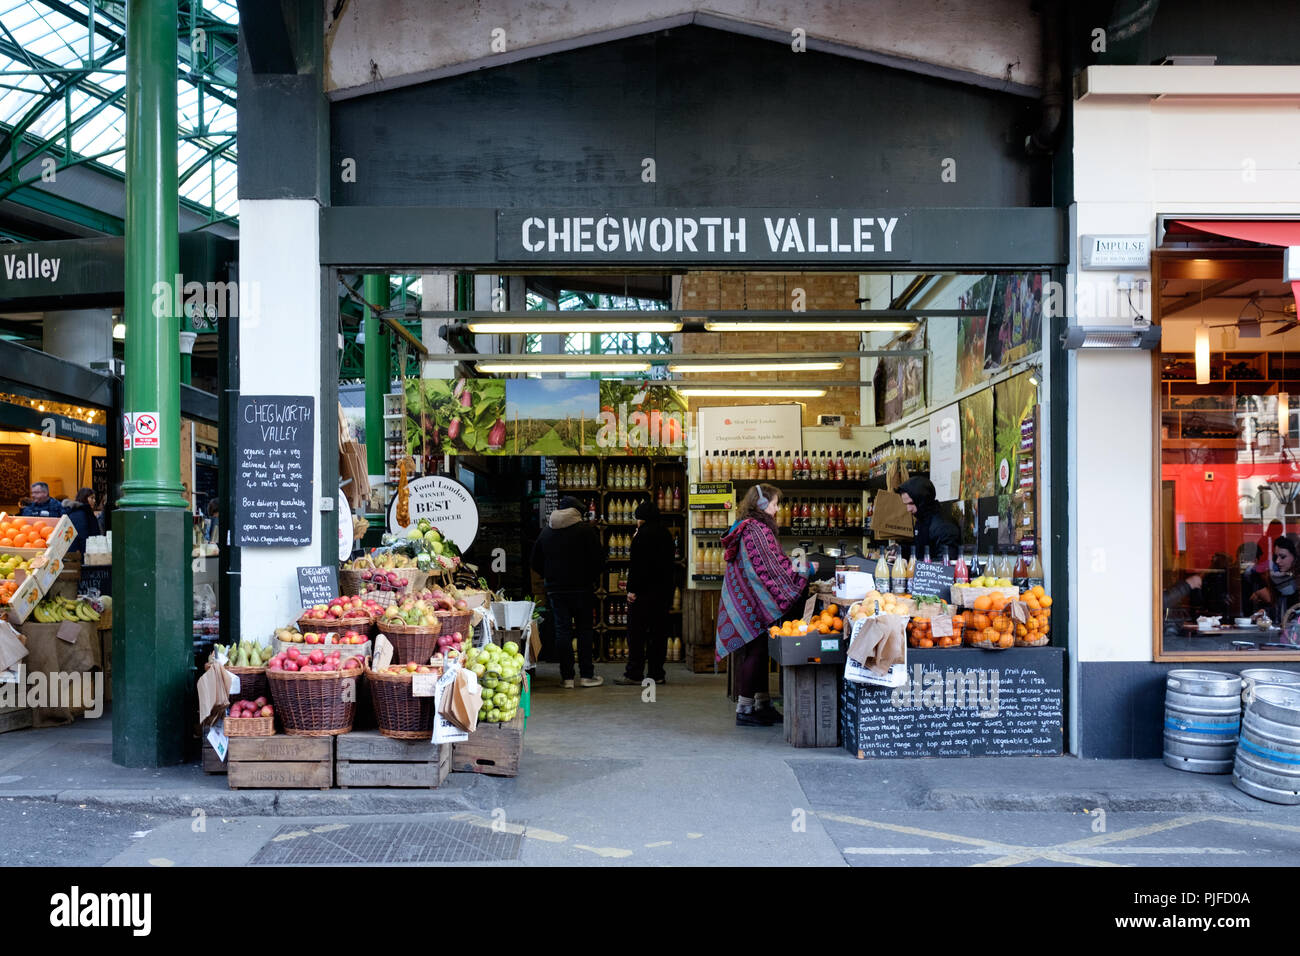 Chegworth Valley market stall à Borough Market, Londres, Angleterre. Banque D'Images